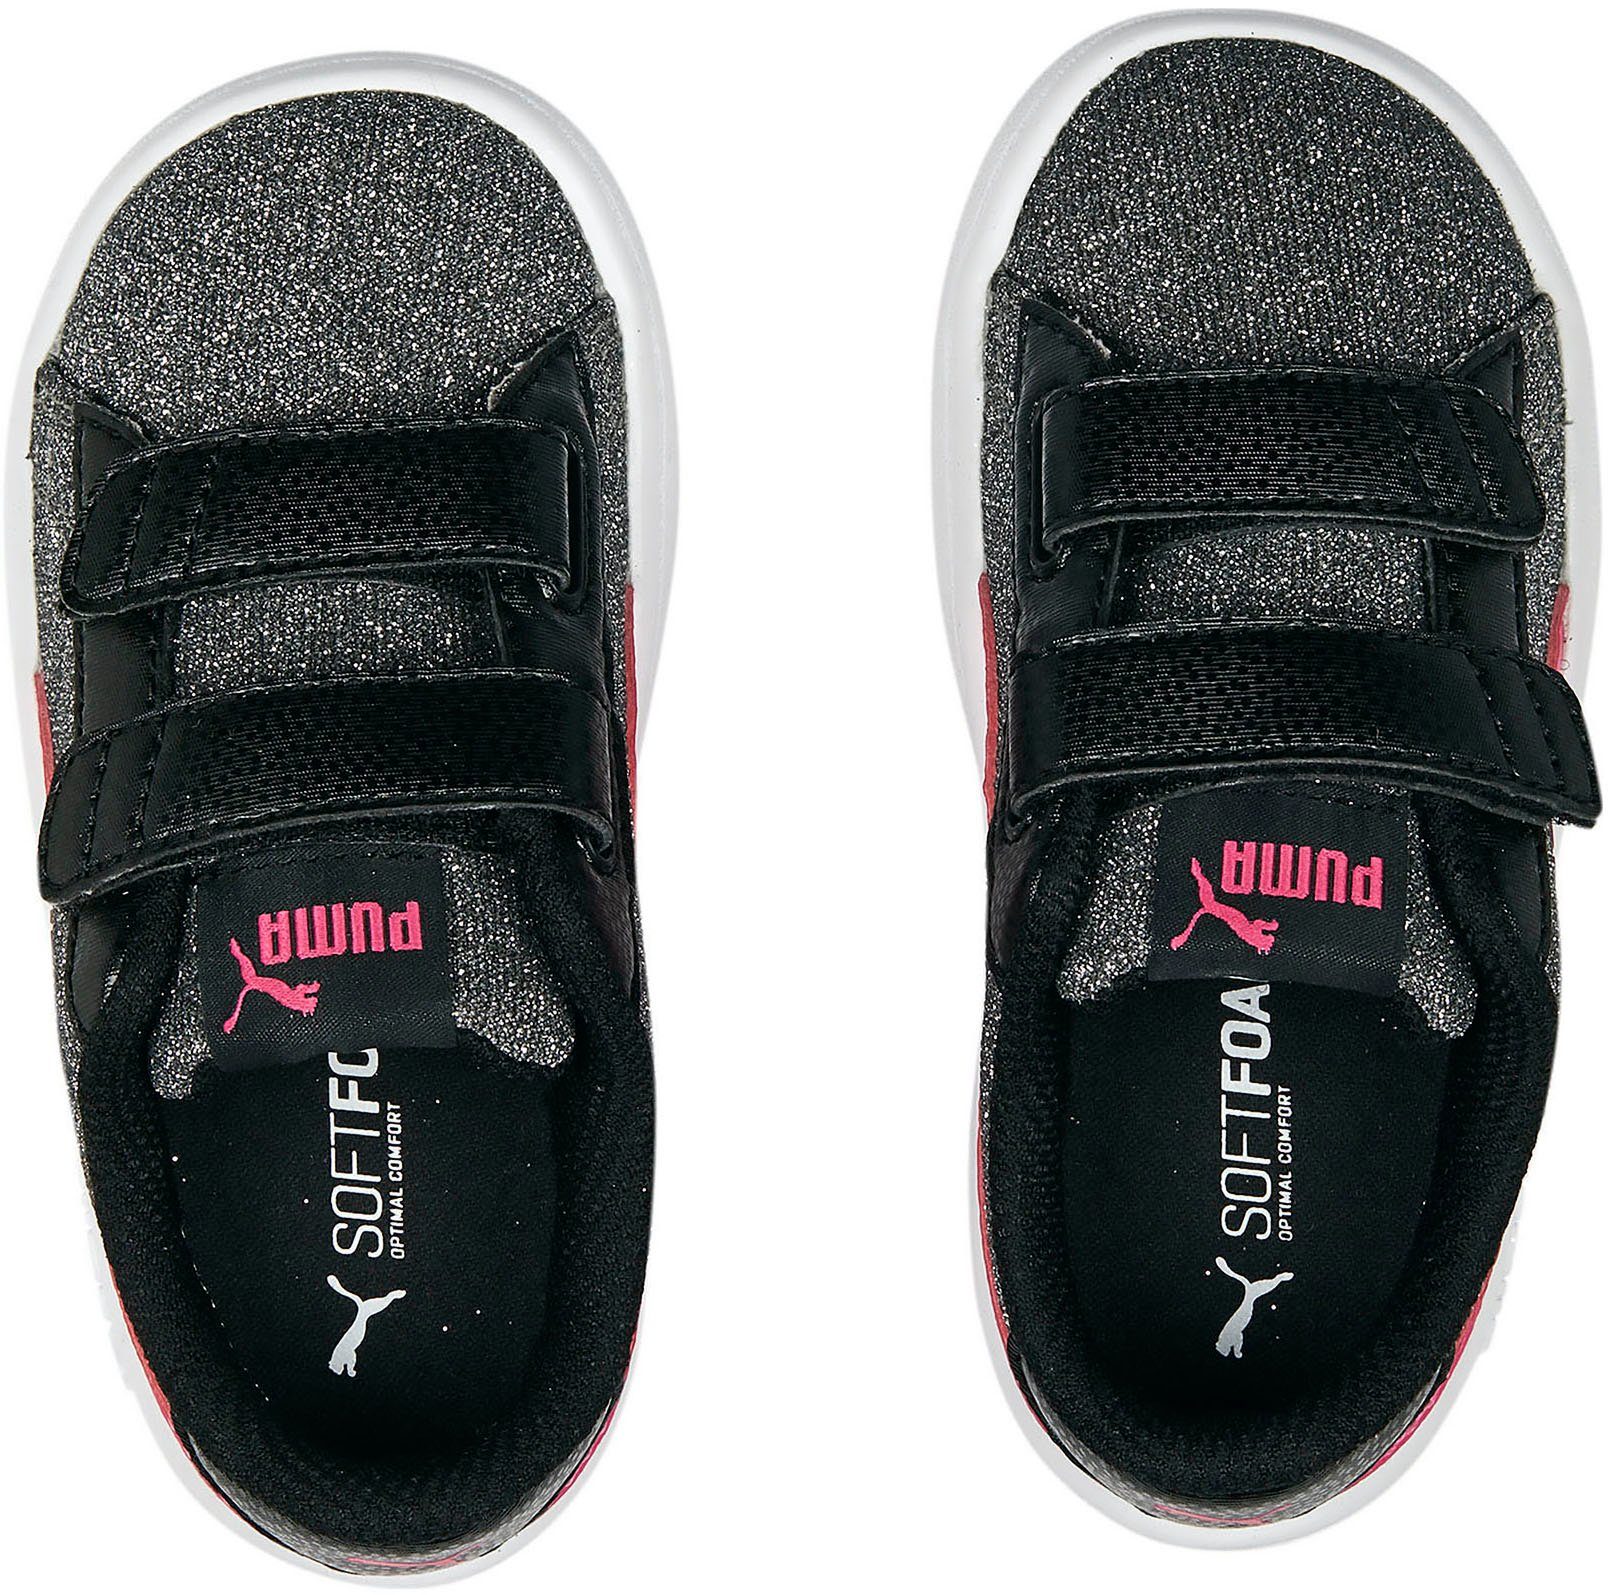 PUMA Puma Smash v2 Glitz schwarz-pink Klettverschluss Inf Sneaker mit V